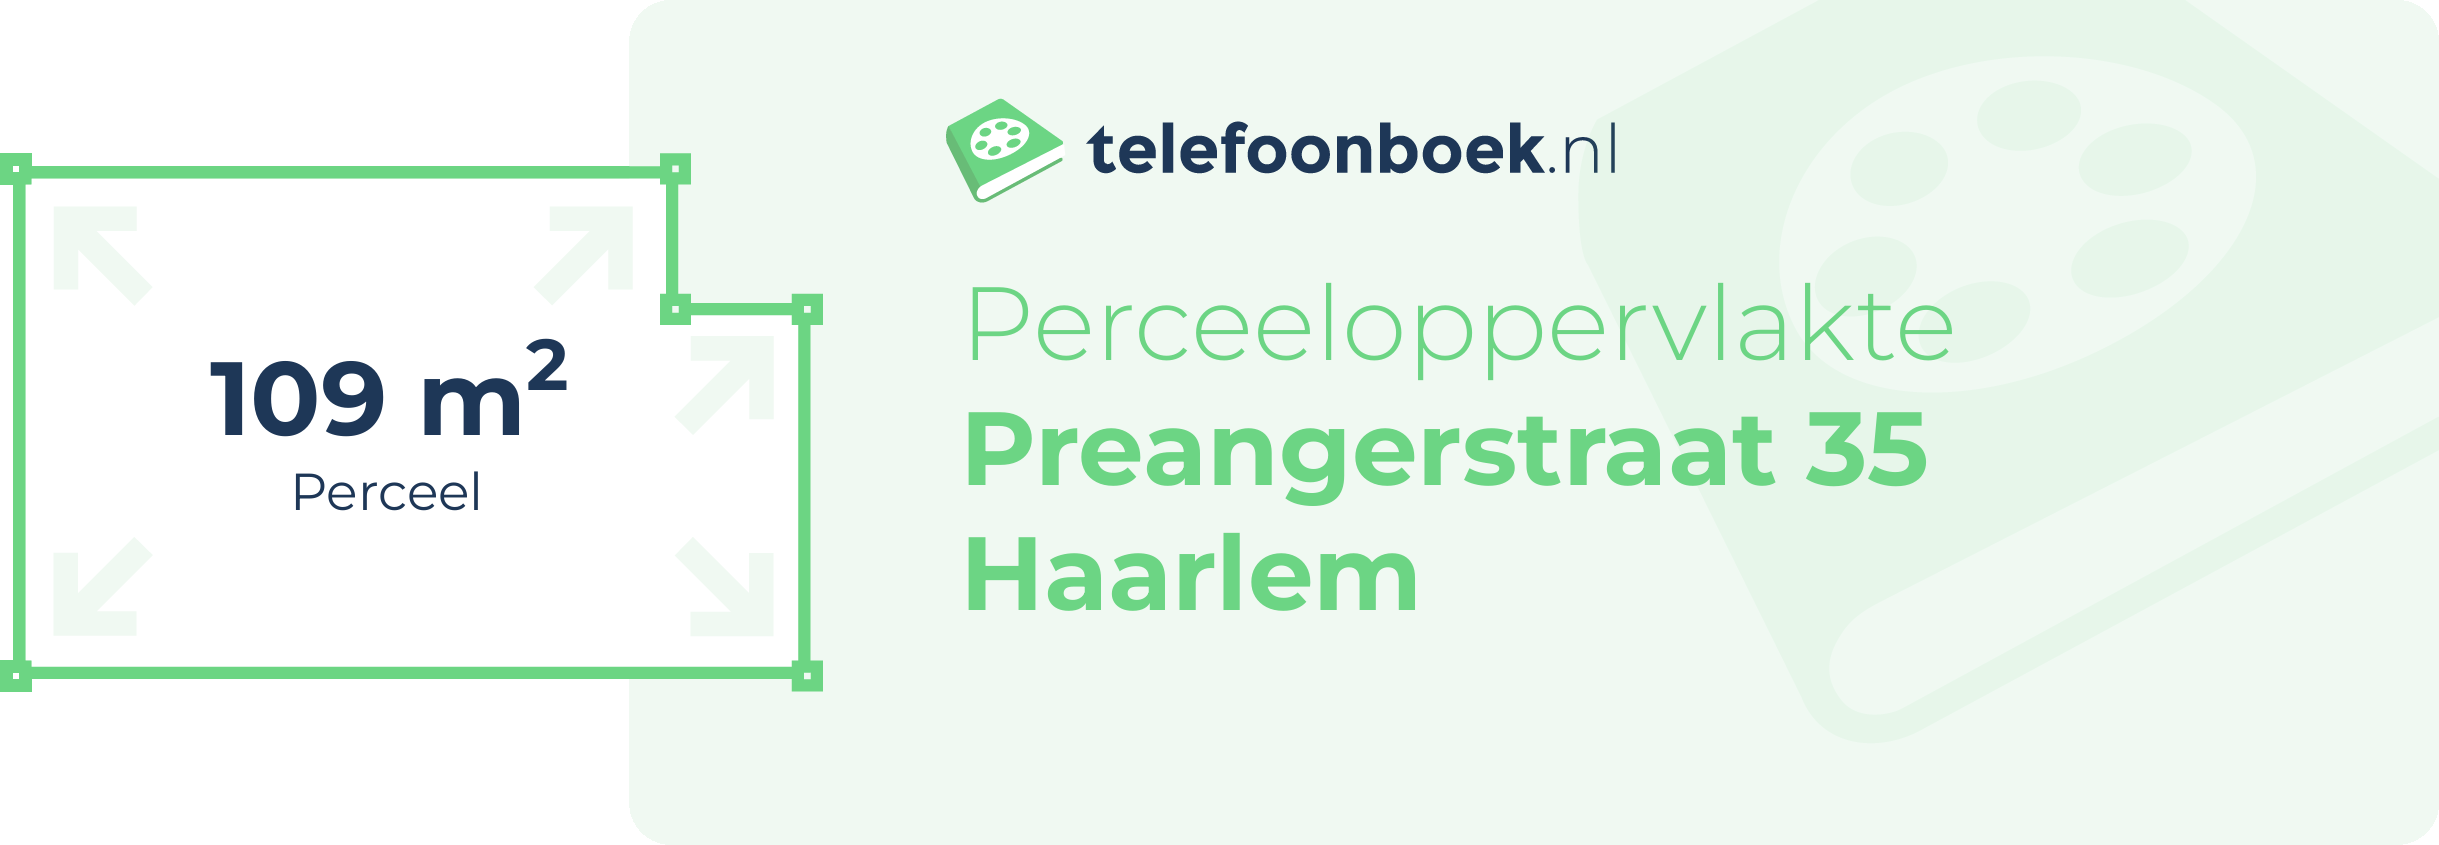 Perceeloppervlakte Preangerstraat 35 Haarlem